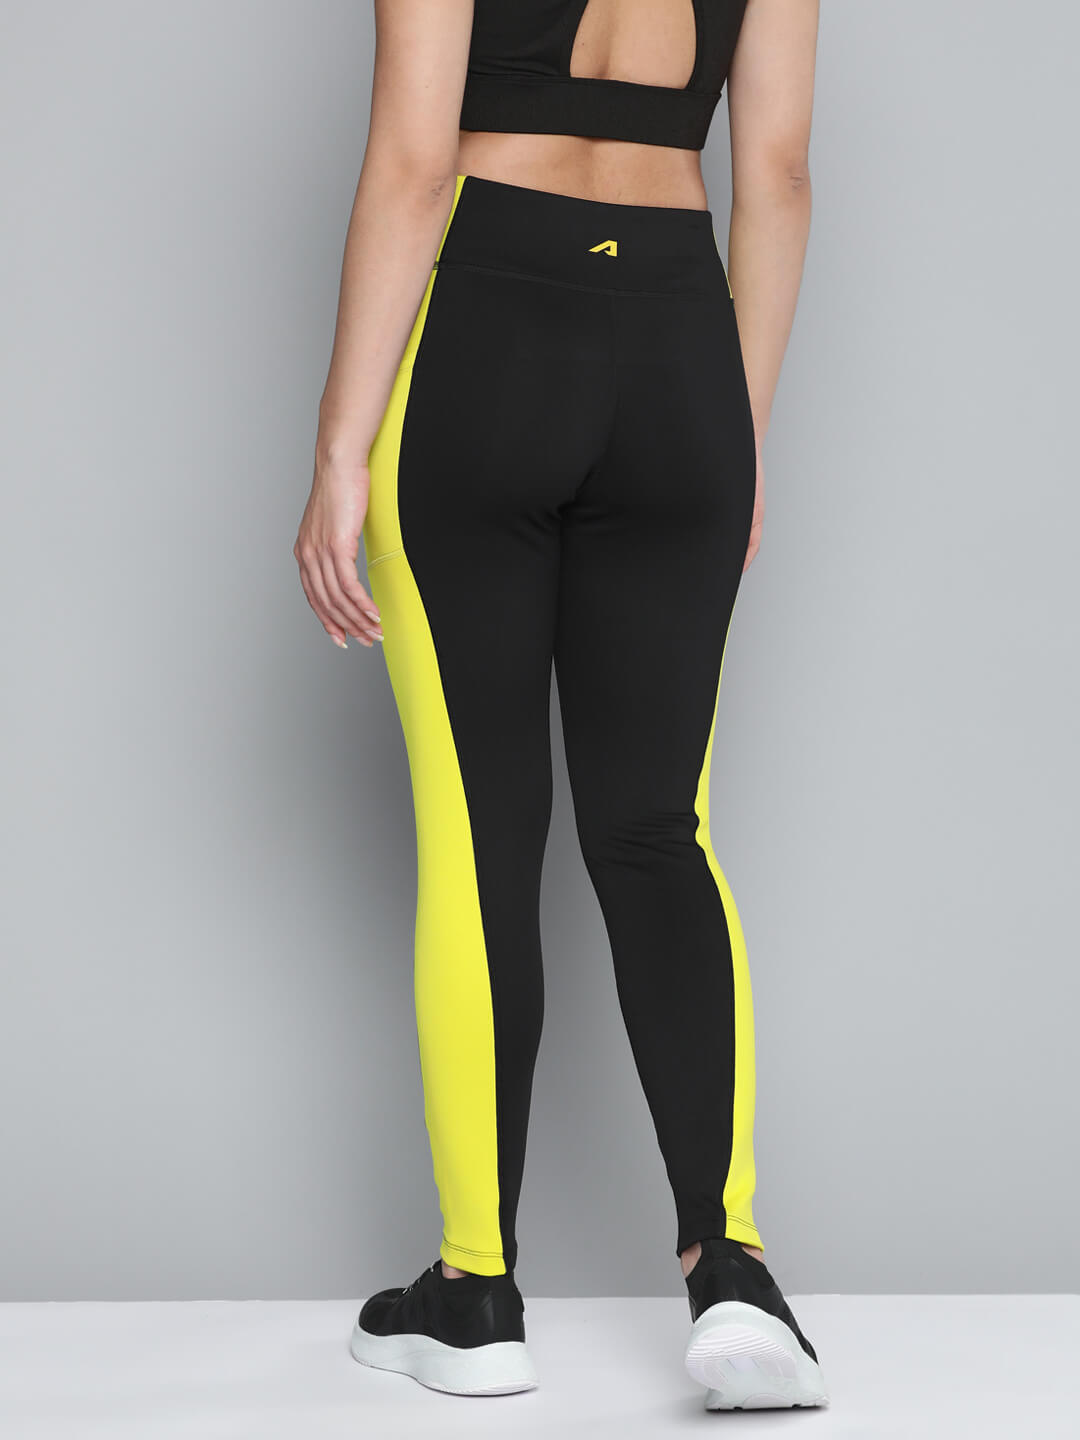 Alcis Women Black Yellow Colorblocked Sports Tights